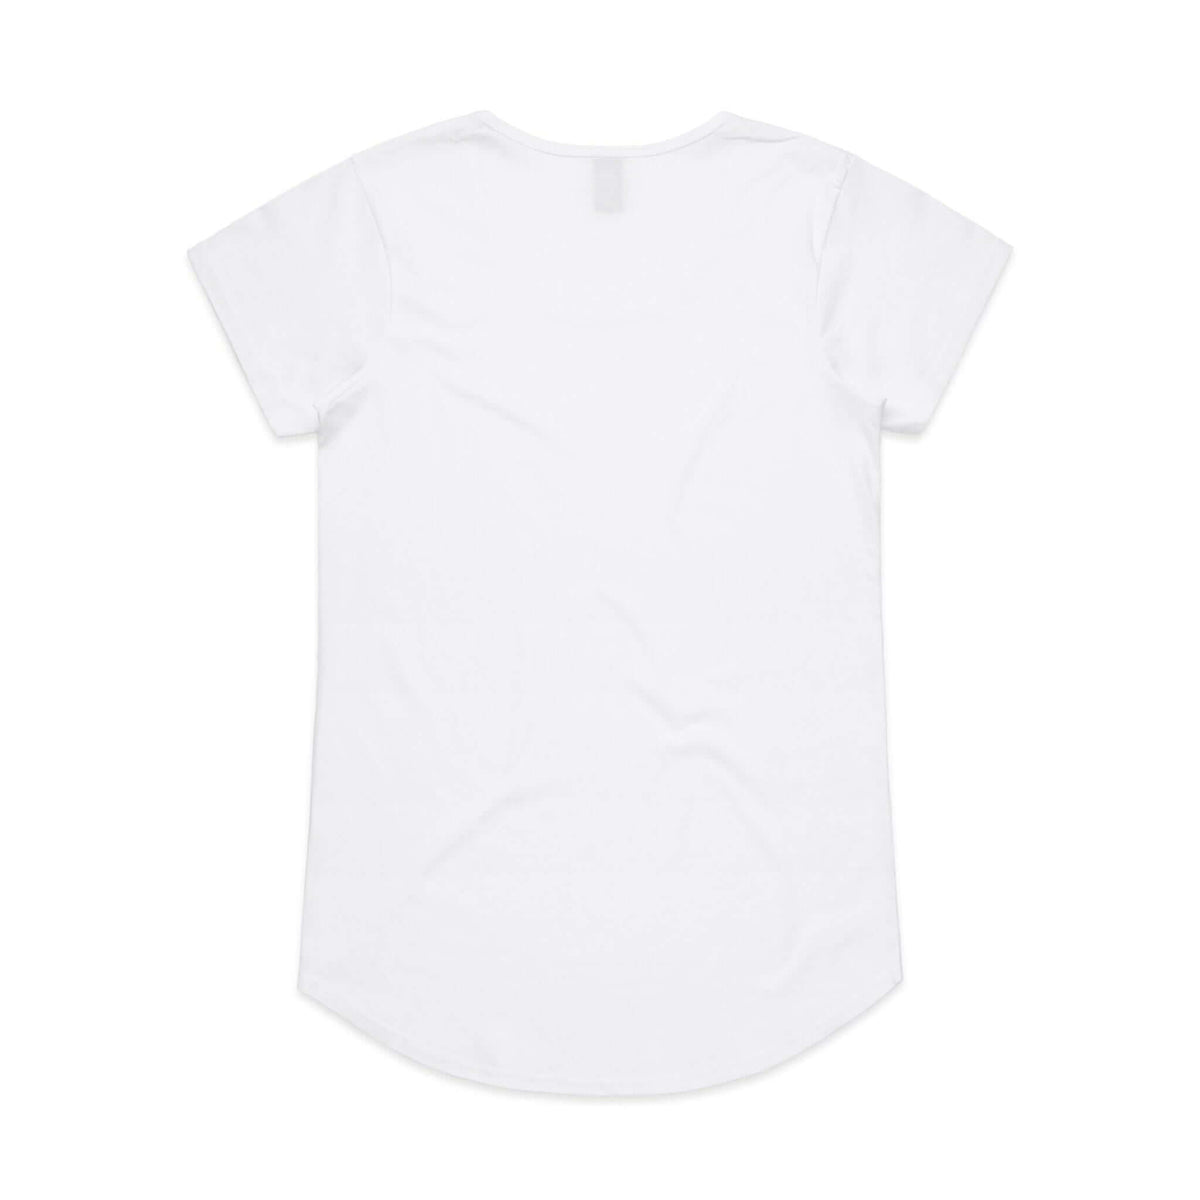 Back view of women's white t shirt